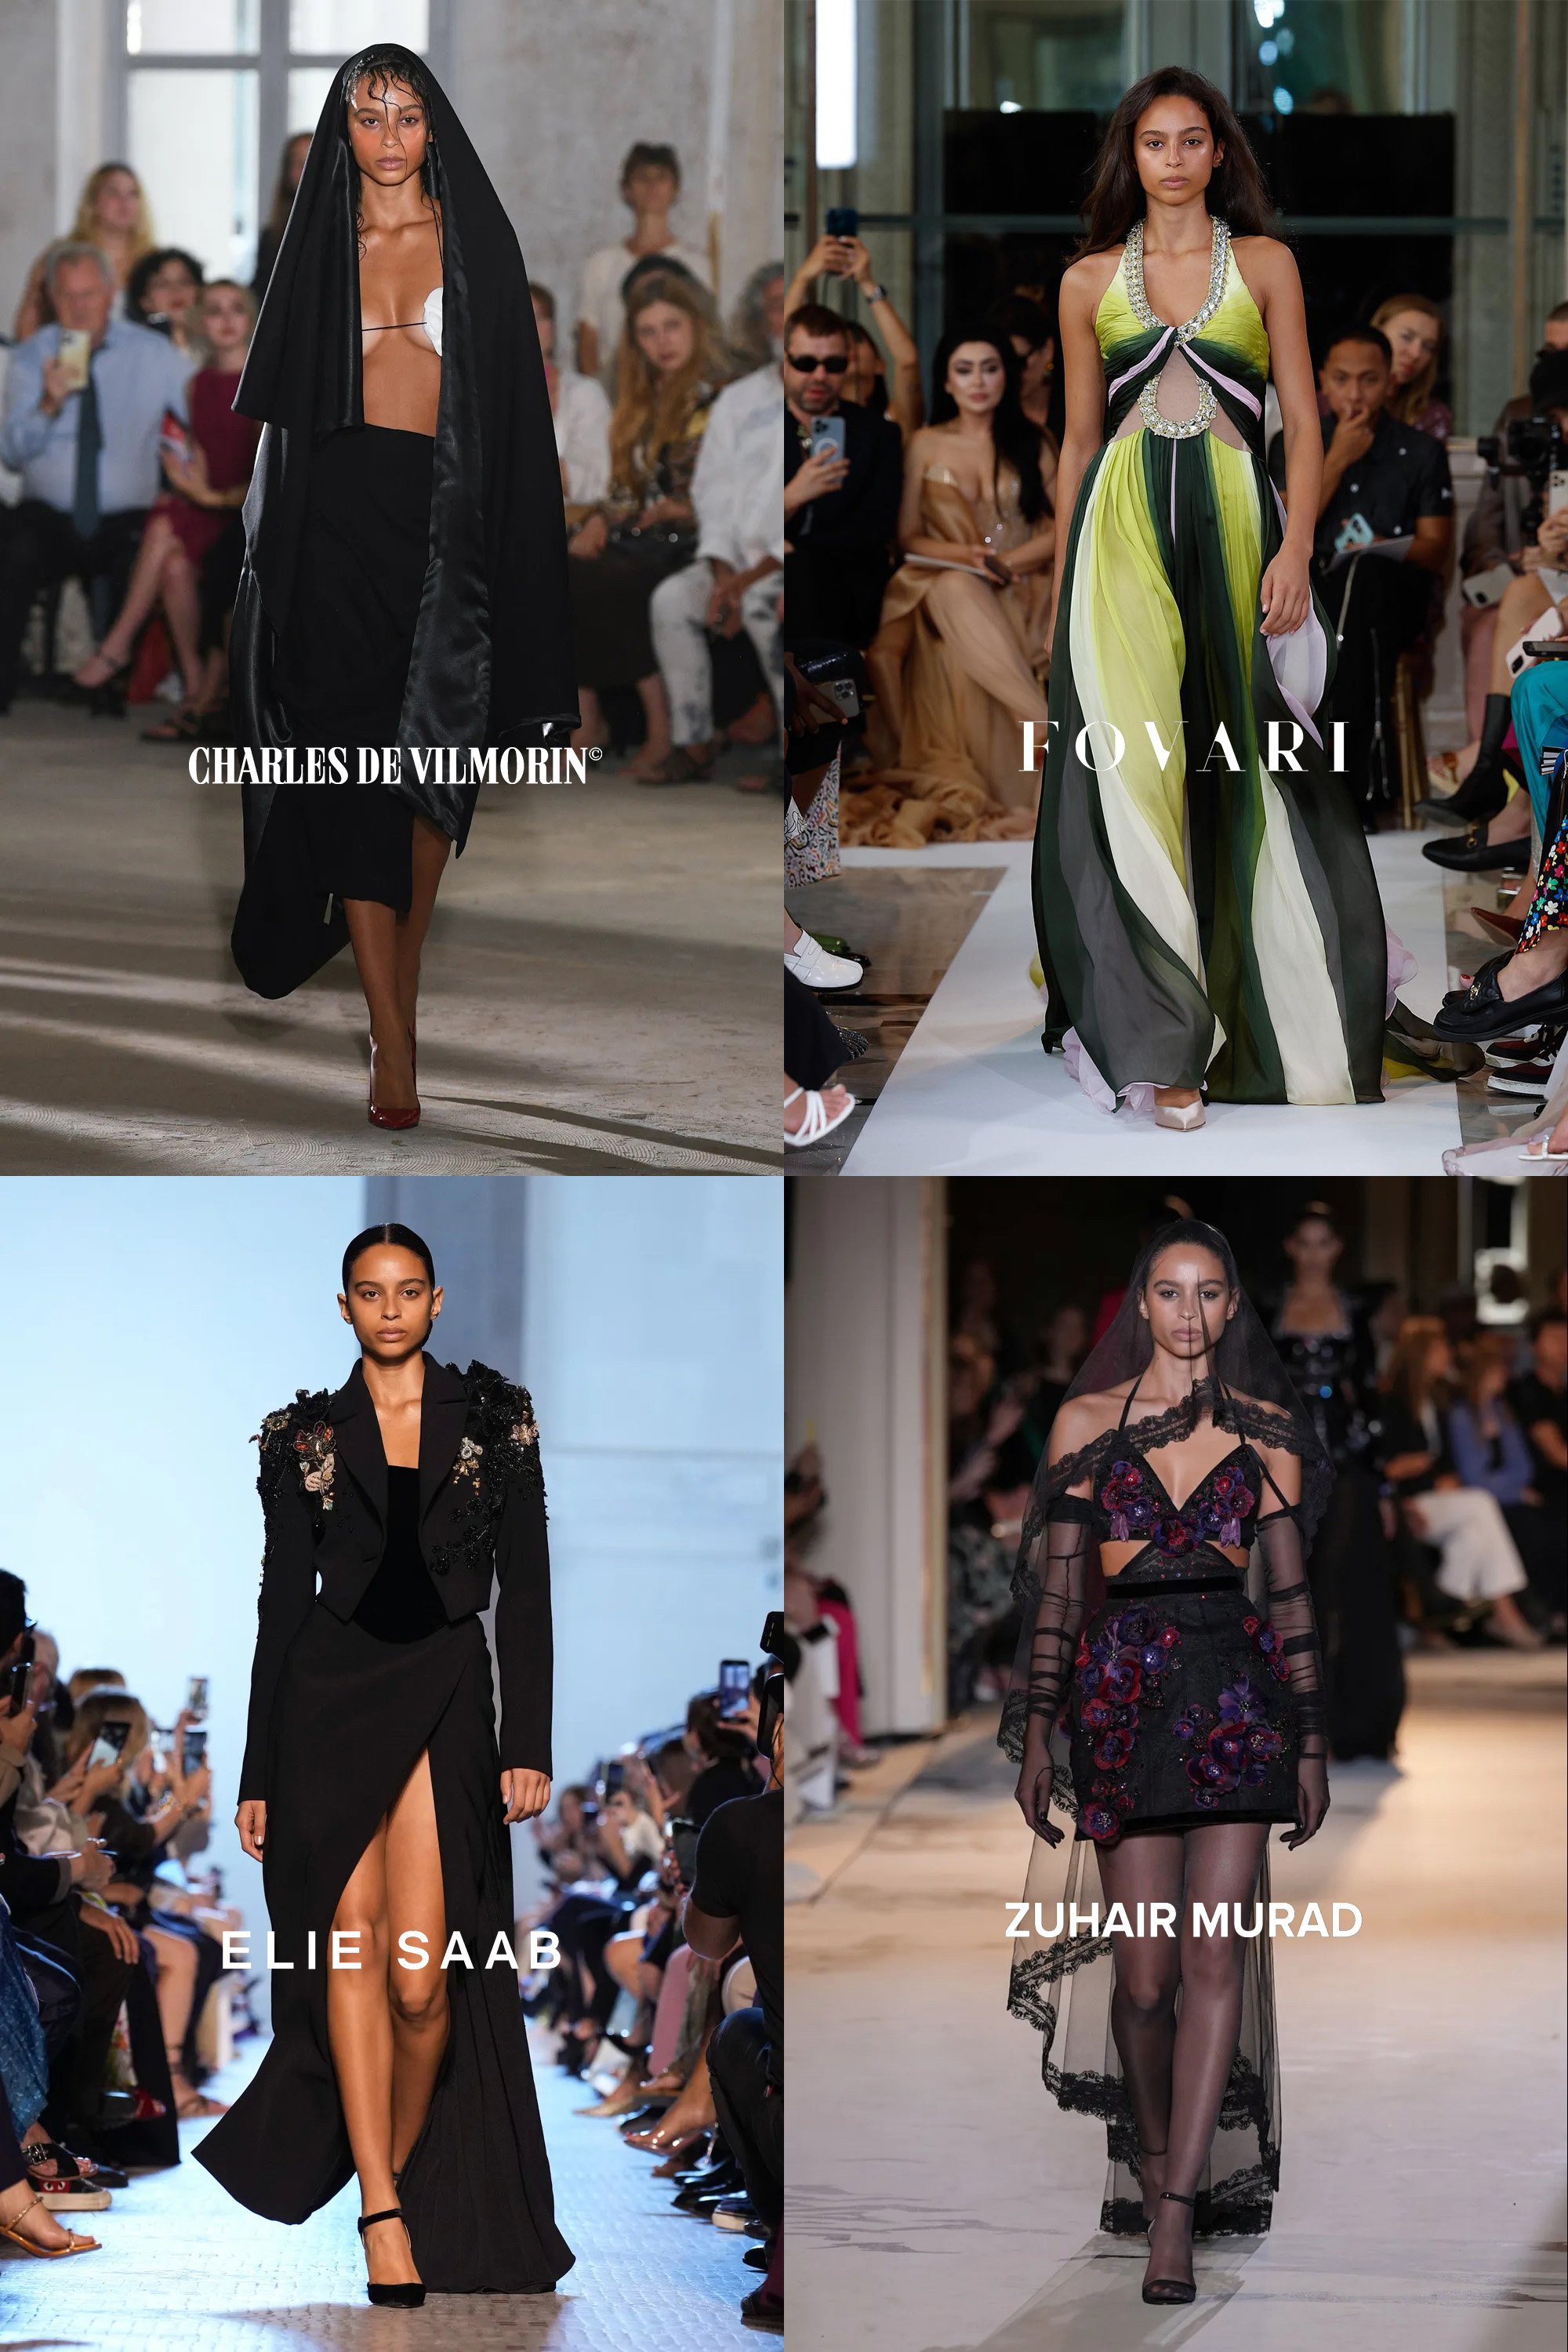 Paris Men's Fashion Week Highlight F/W 2020 Part 3 - Achtung